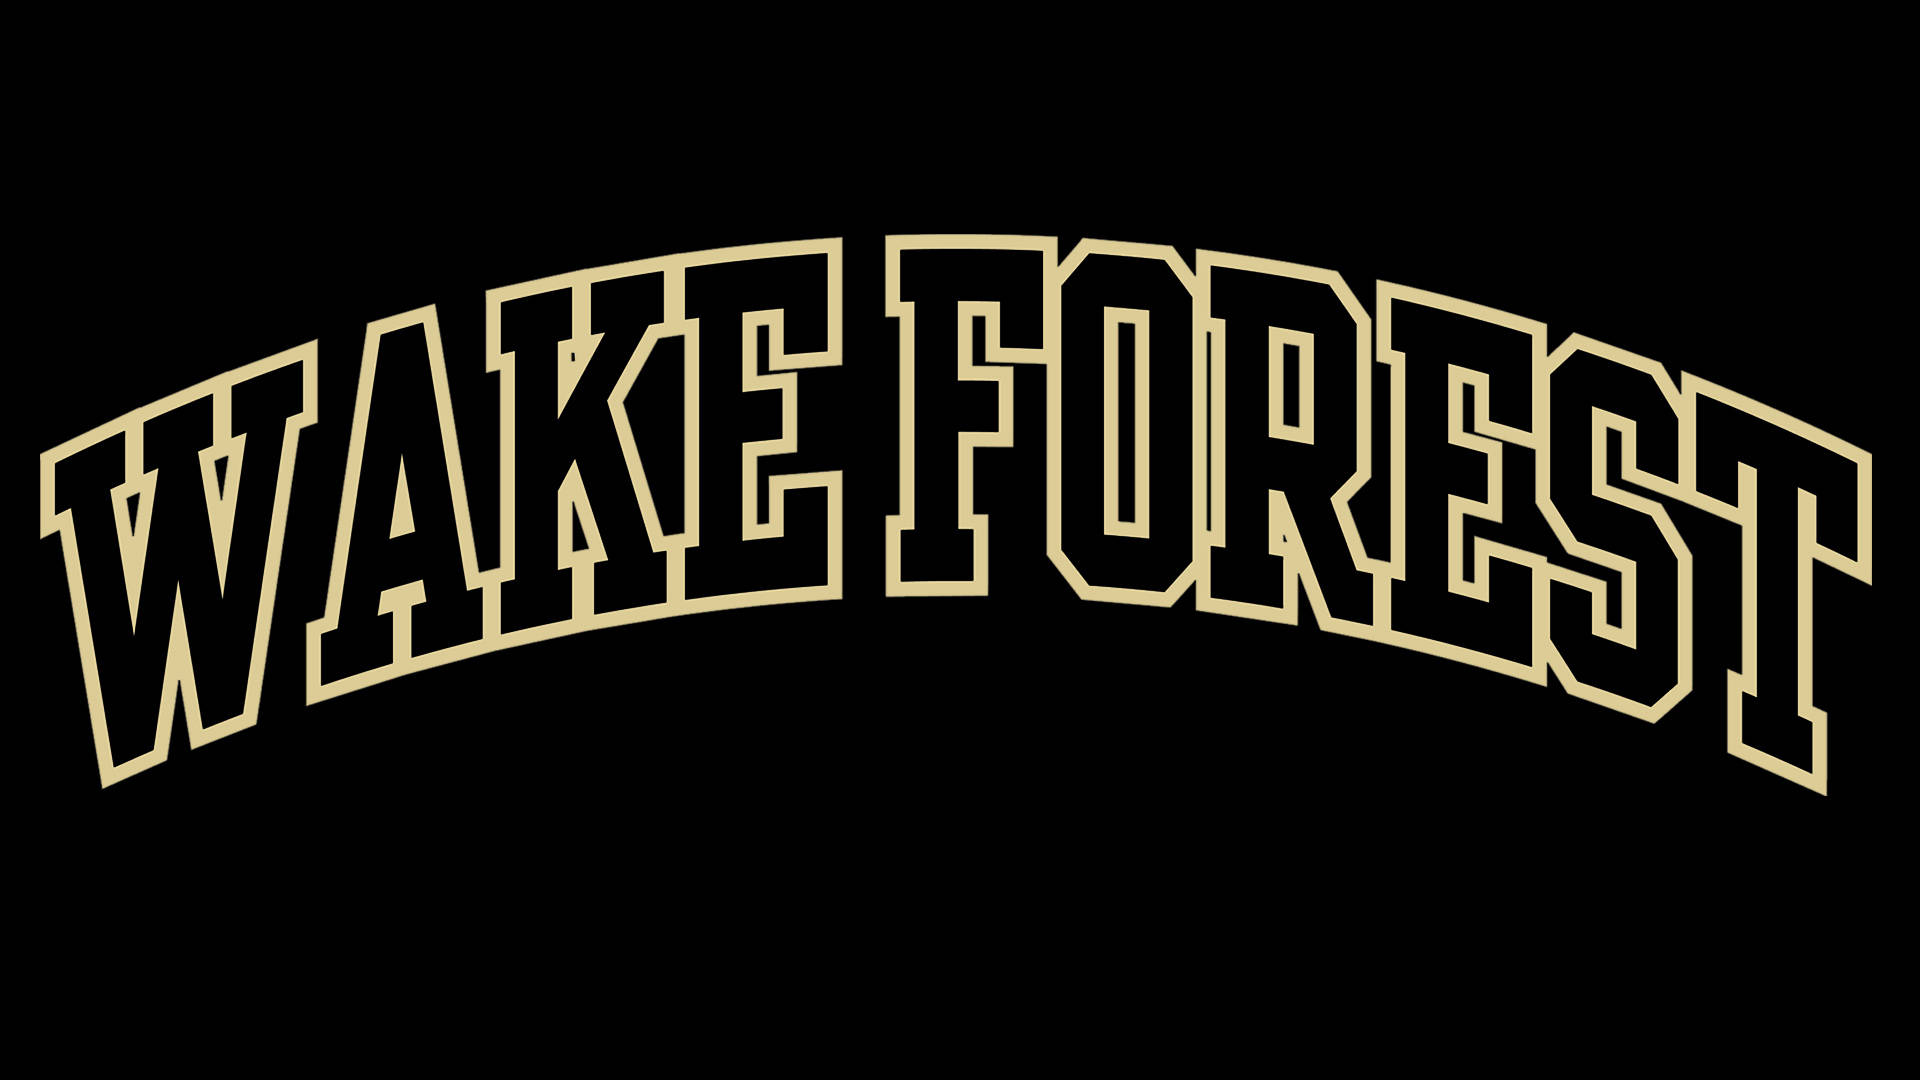 Wakeforest University-logotyp, Mörk Bakgrund. Wallpaper